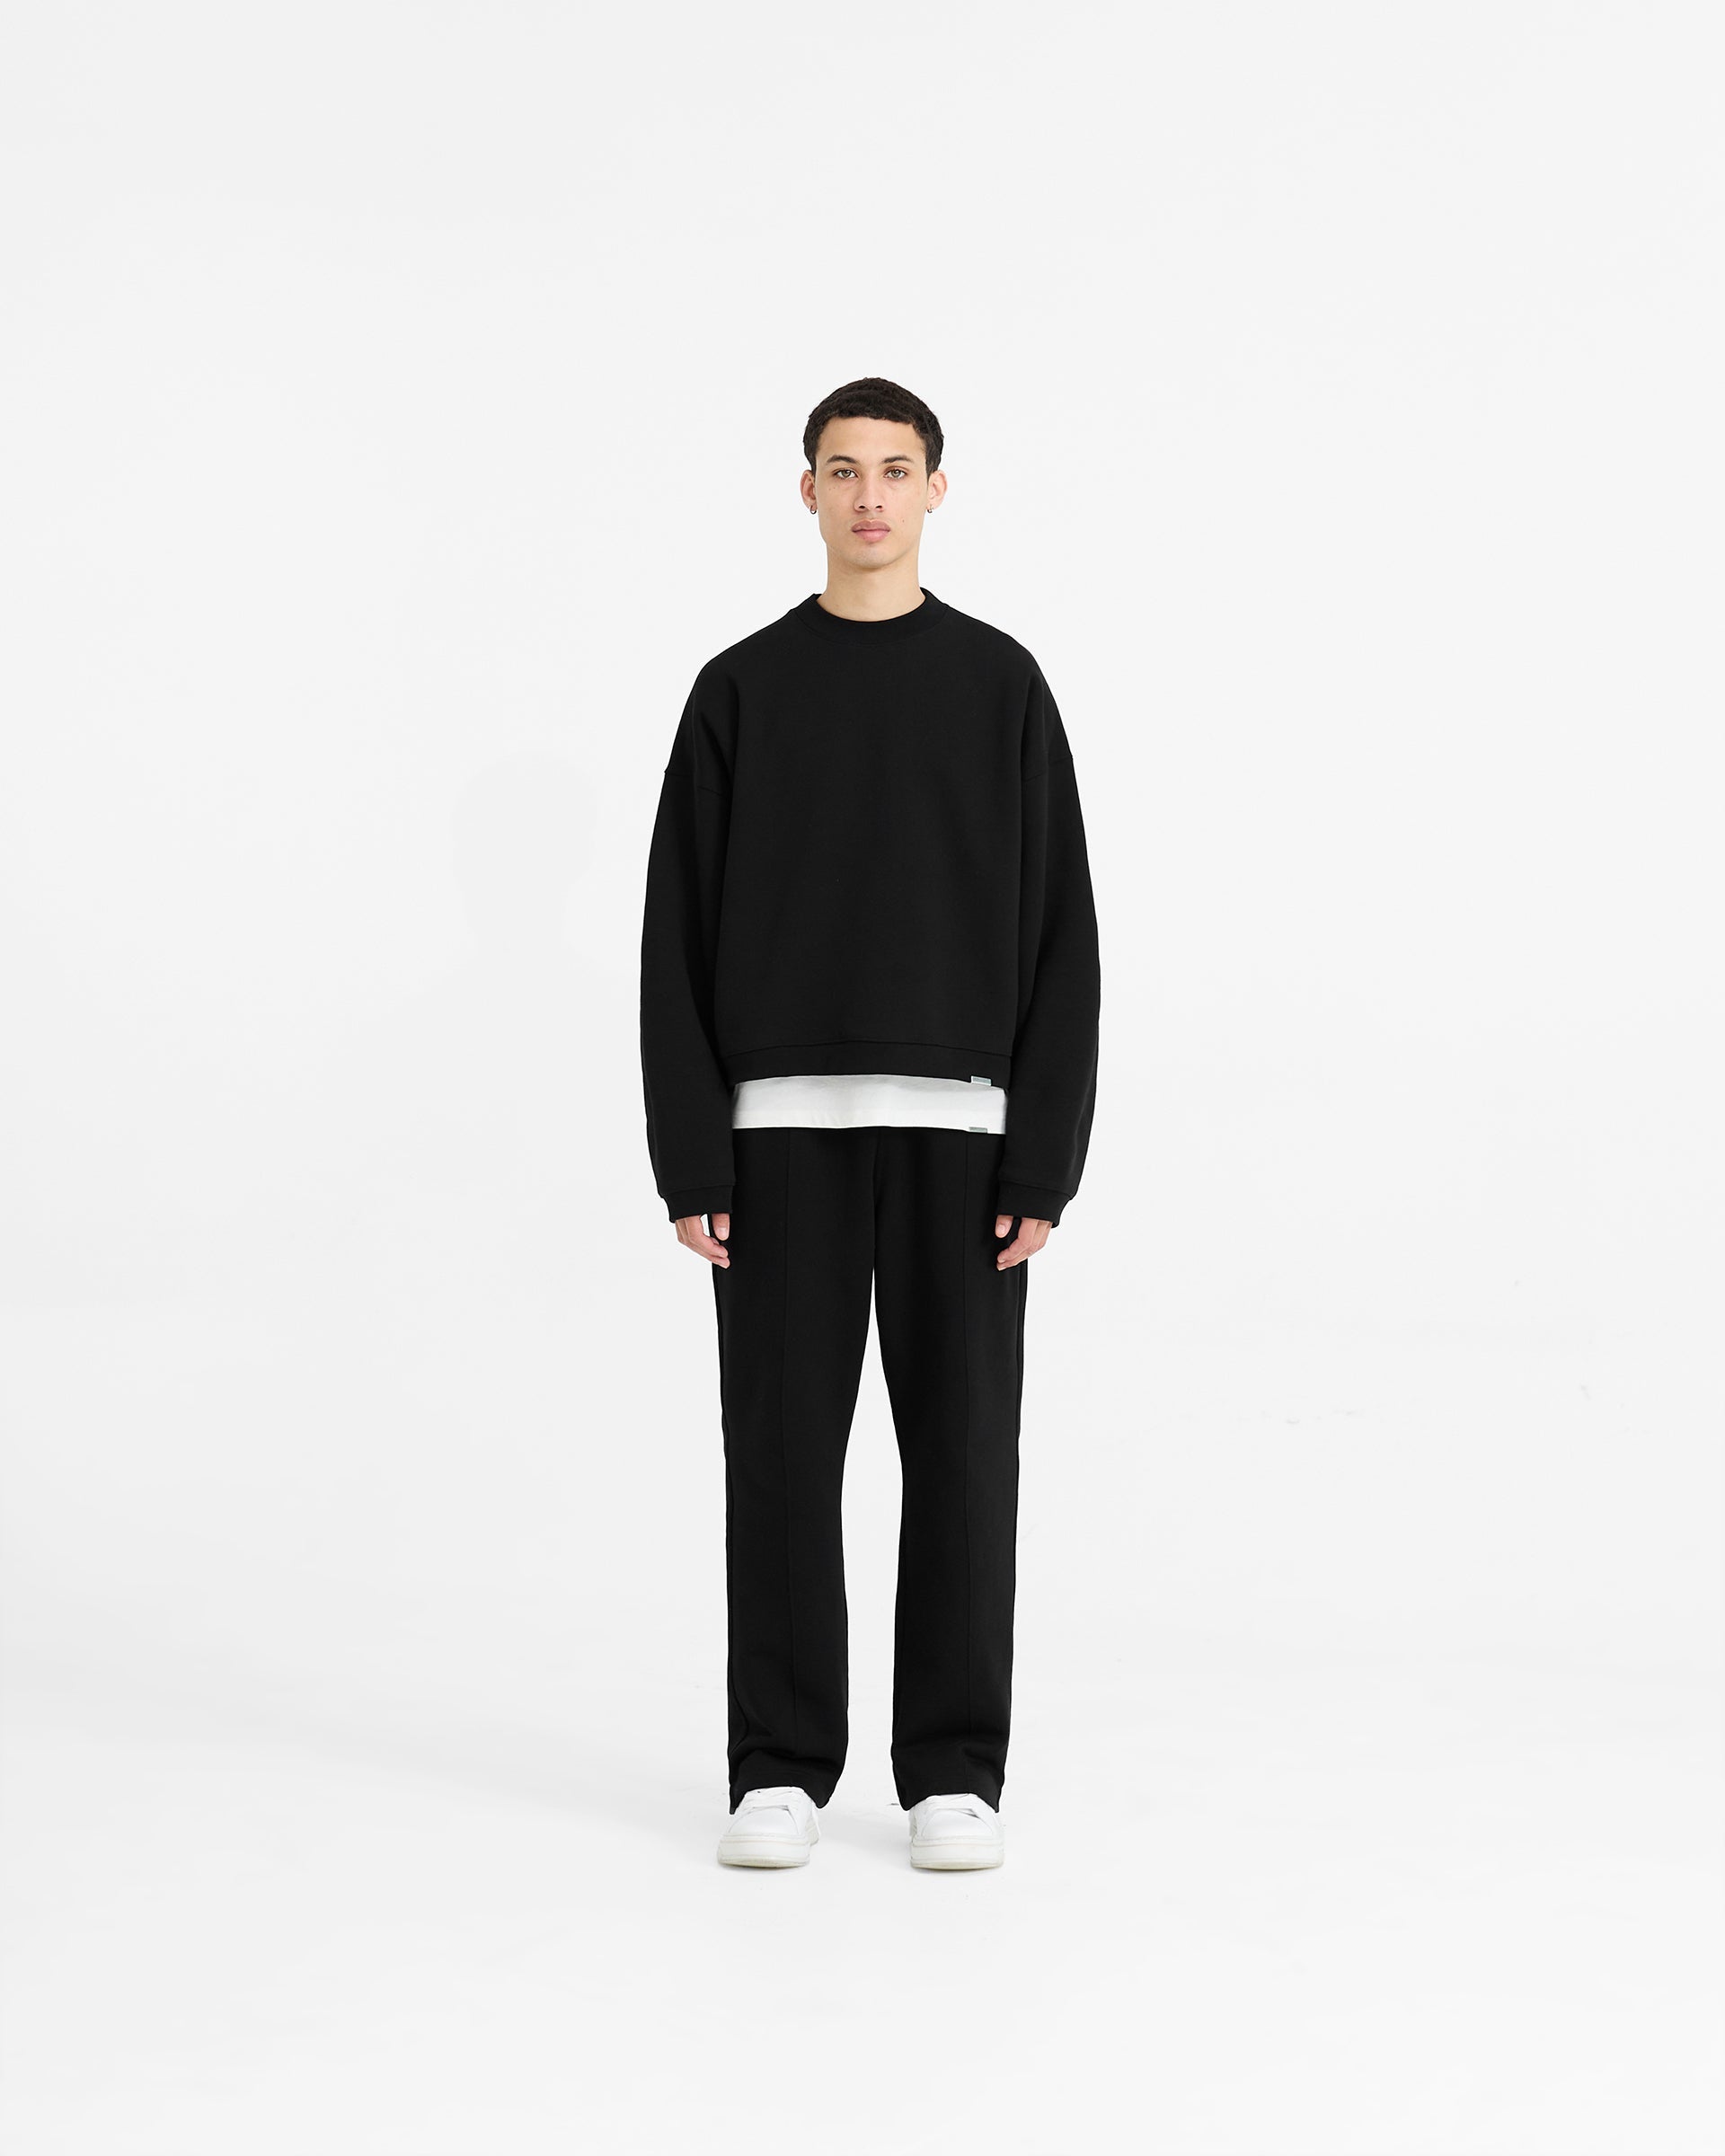 Initial Boxy Sweater - Black